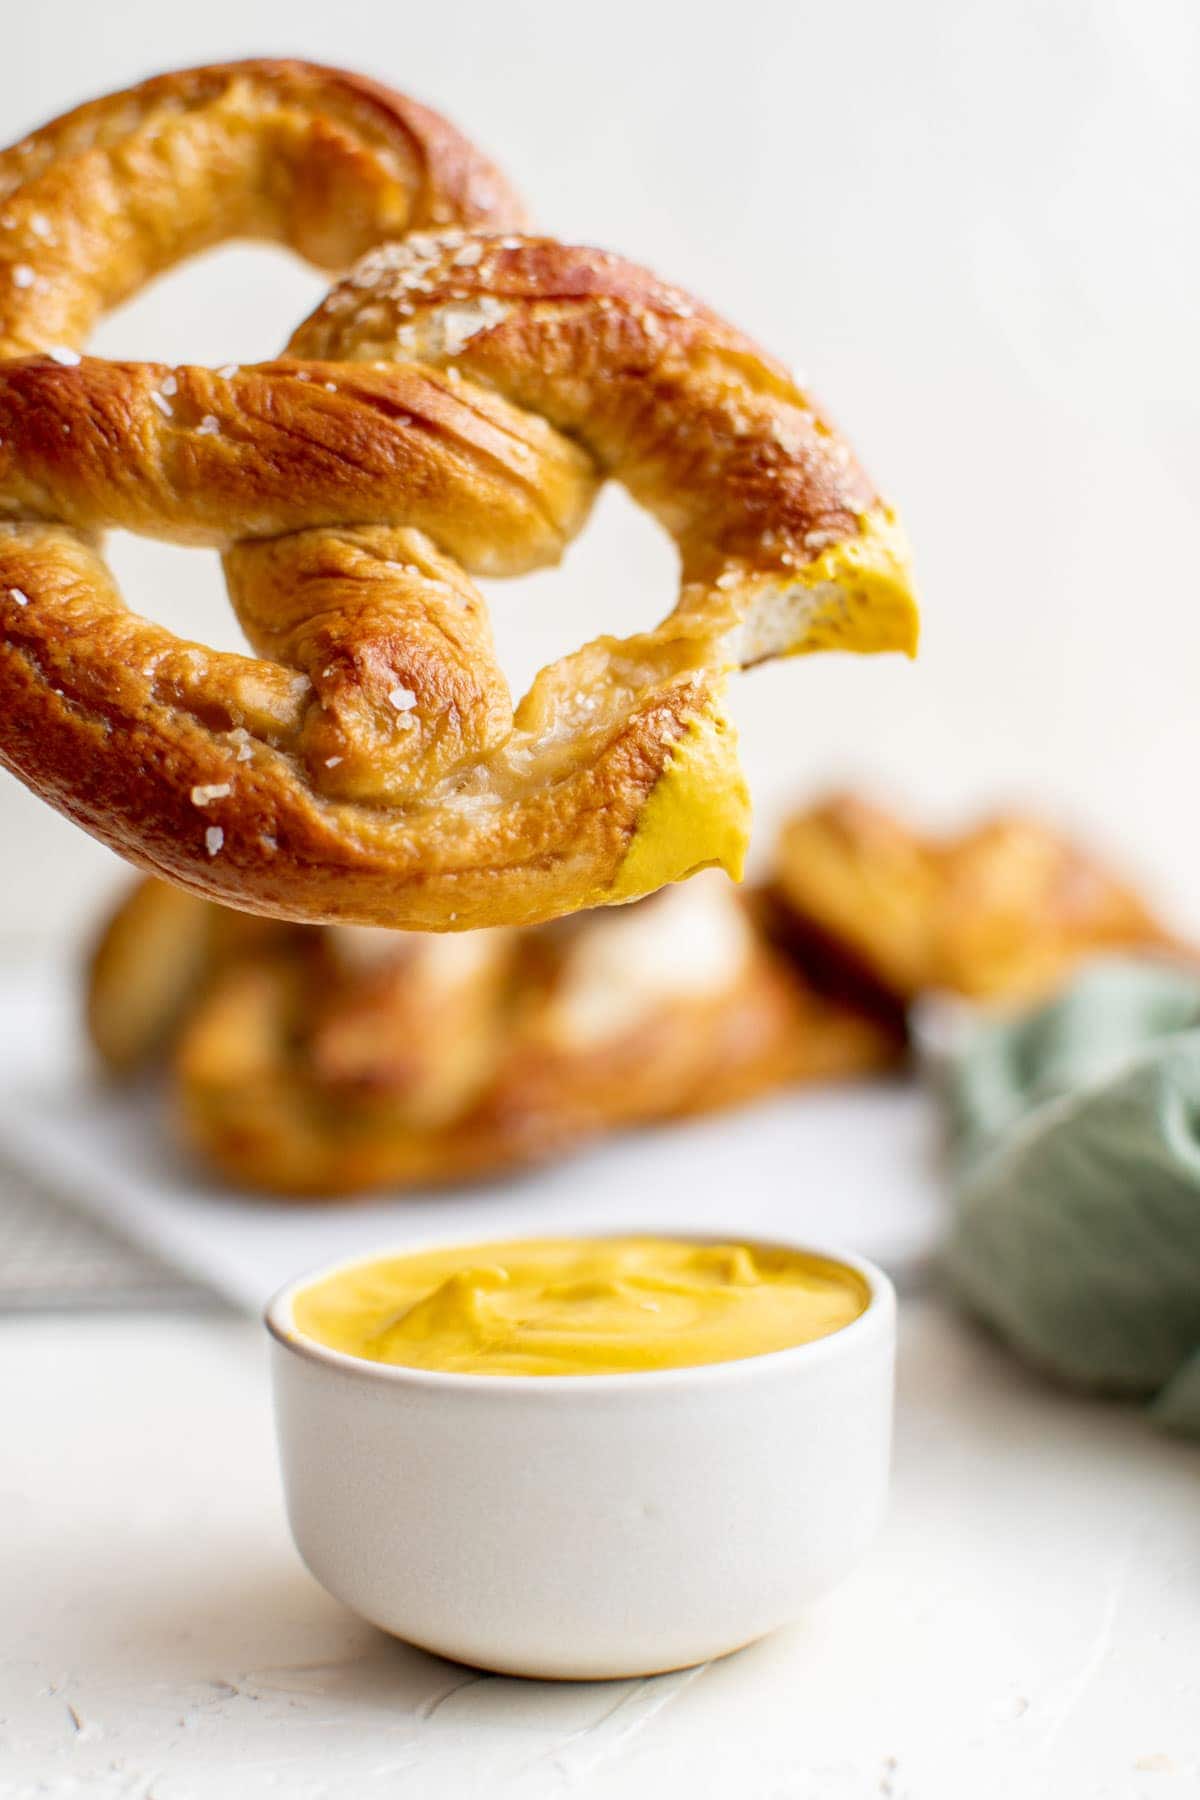 soft pretzel dipped in mustard